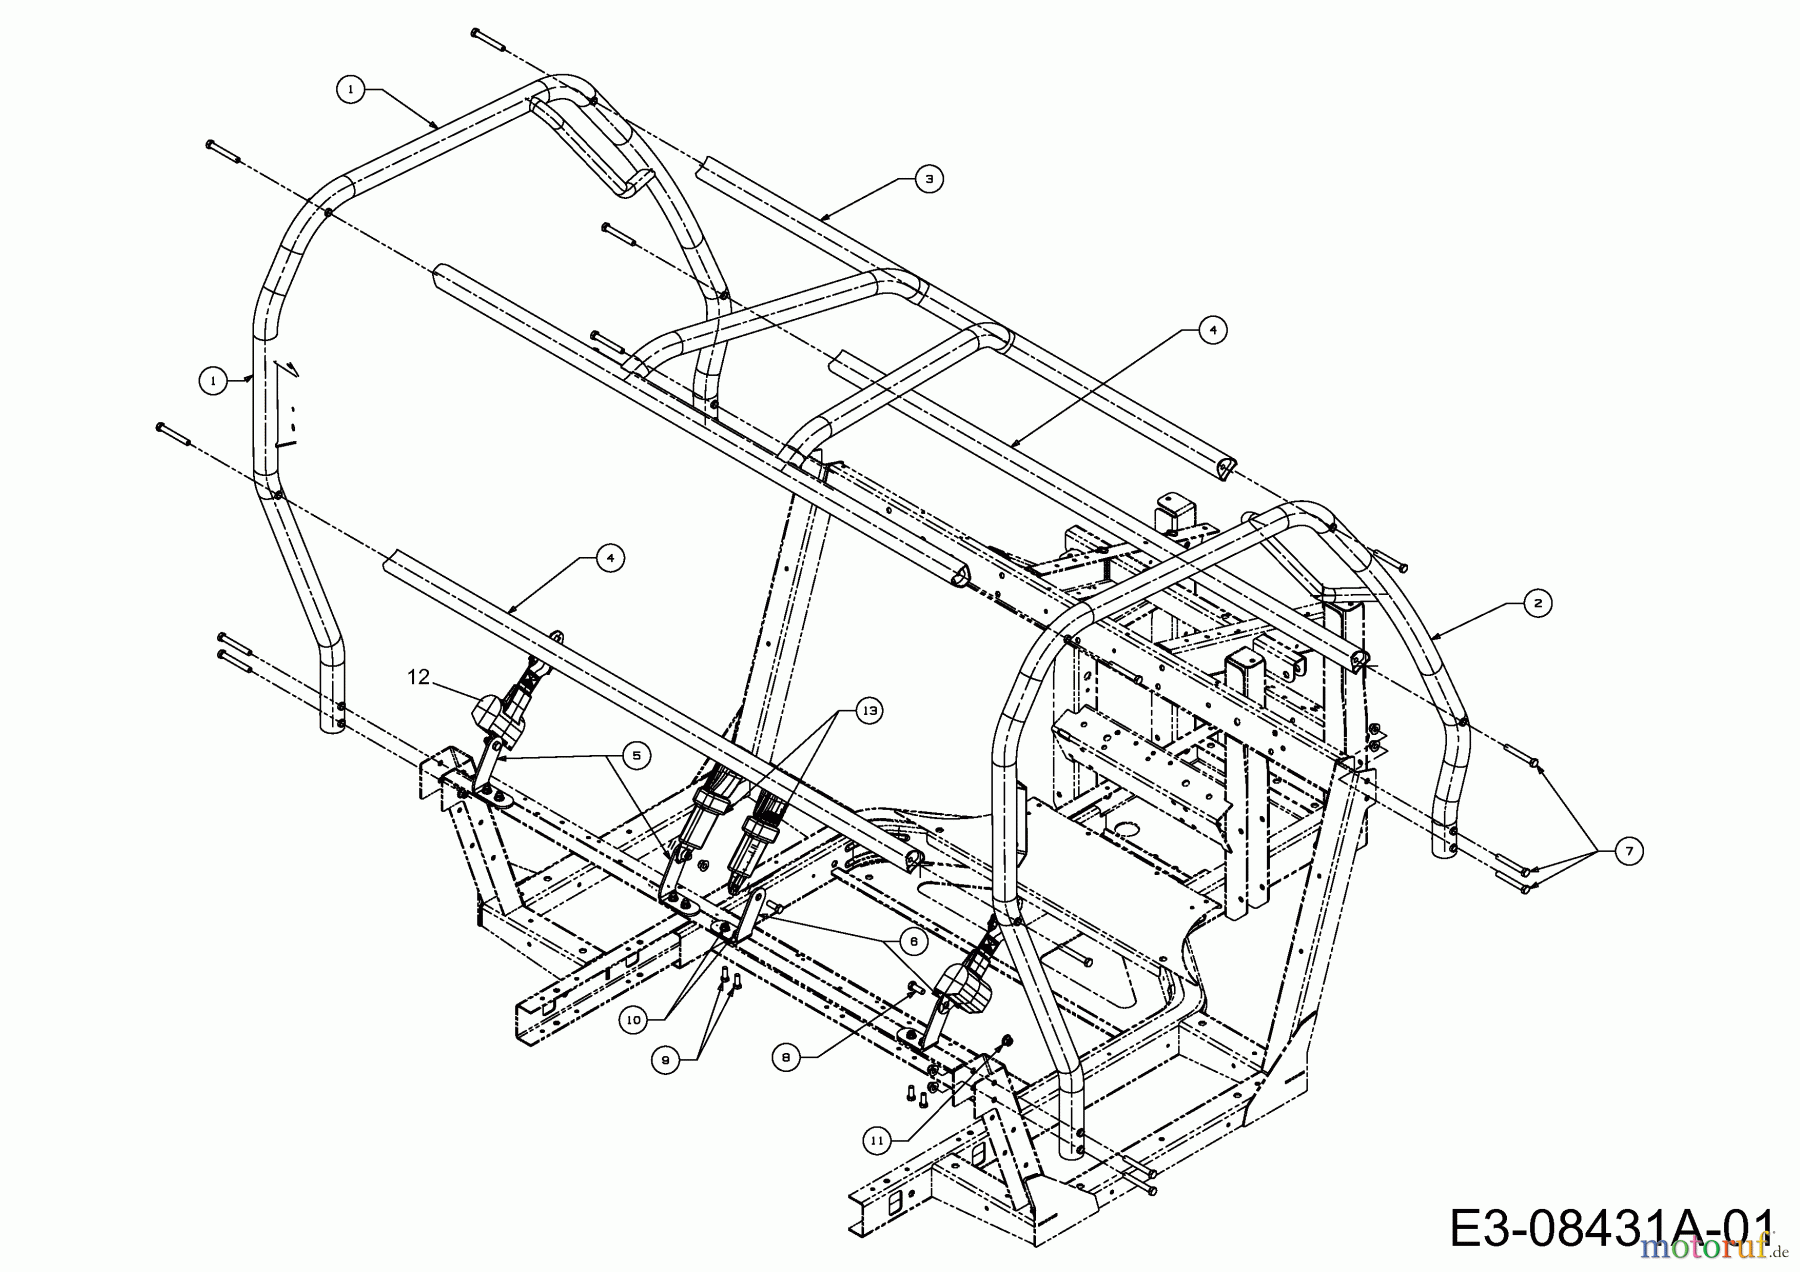  Massey Ferguson Utility Vehicle MF 20 MD 37AK468D695  (2014) Seat belts, Rollbar